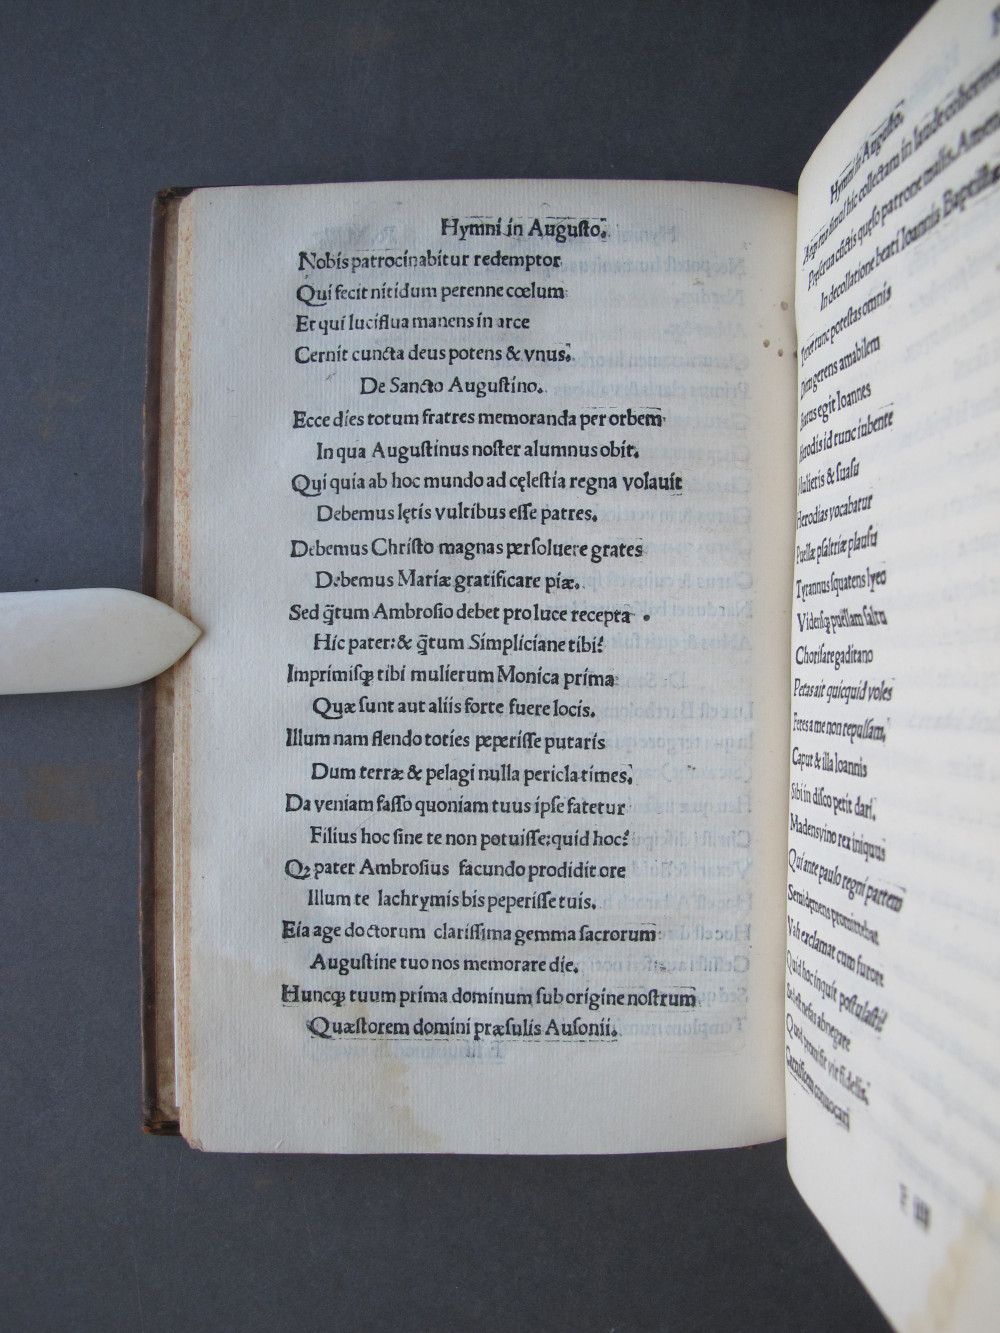 Folio 43 verso